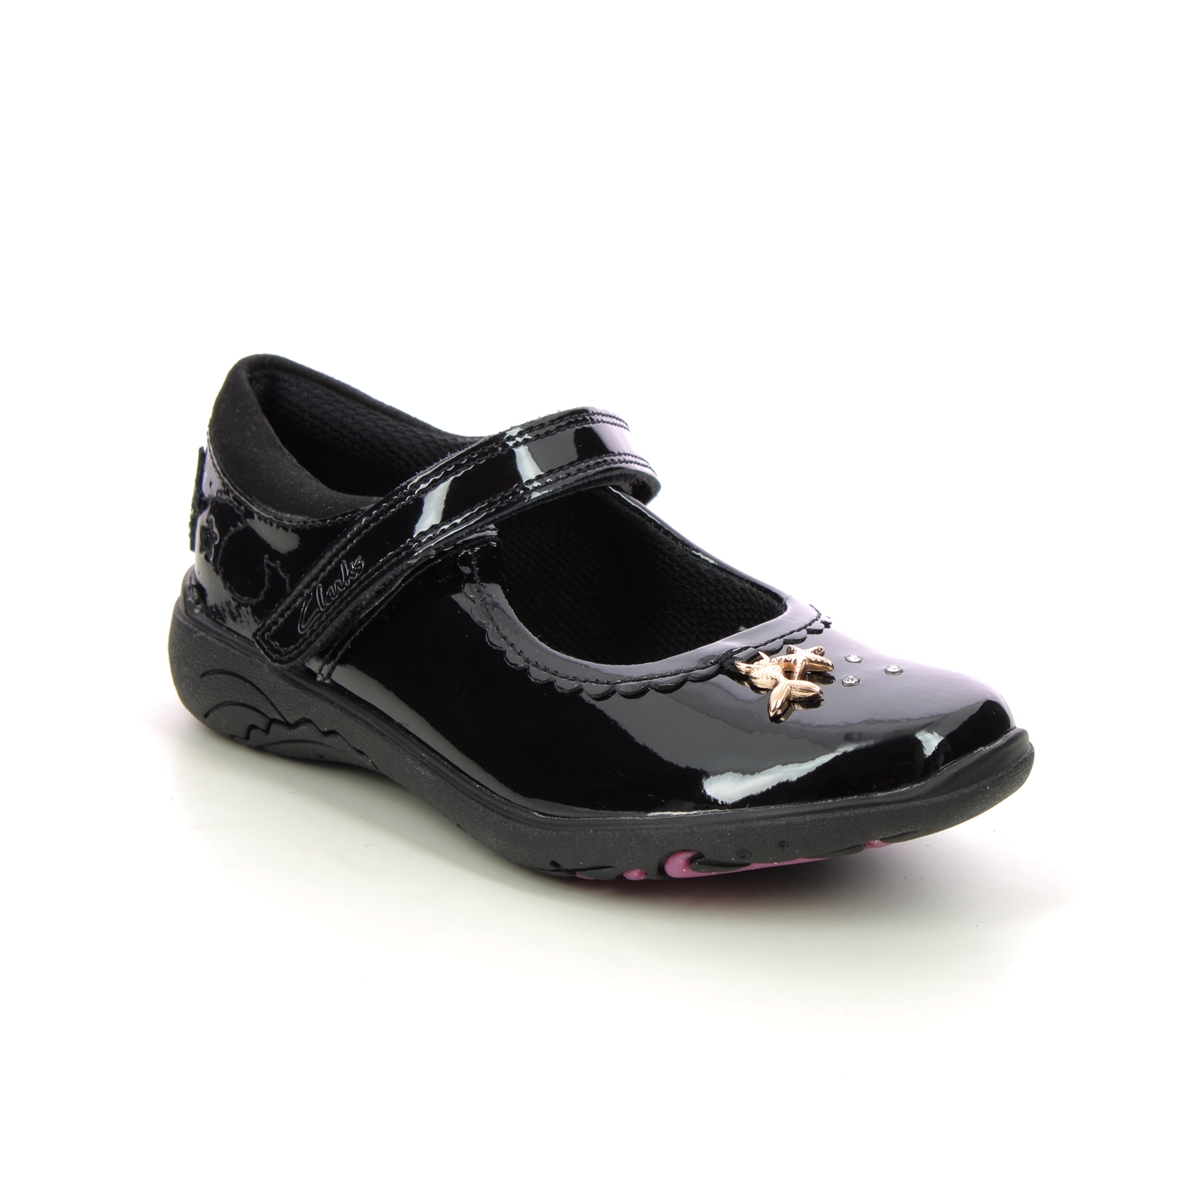 Clarks Relda Sea K Mary Jane Black Patent Kids Girls School Shoes 722417G In Size 12.5 In Plain Black Patent G Width Fitting For School For kids